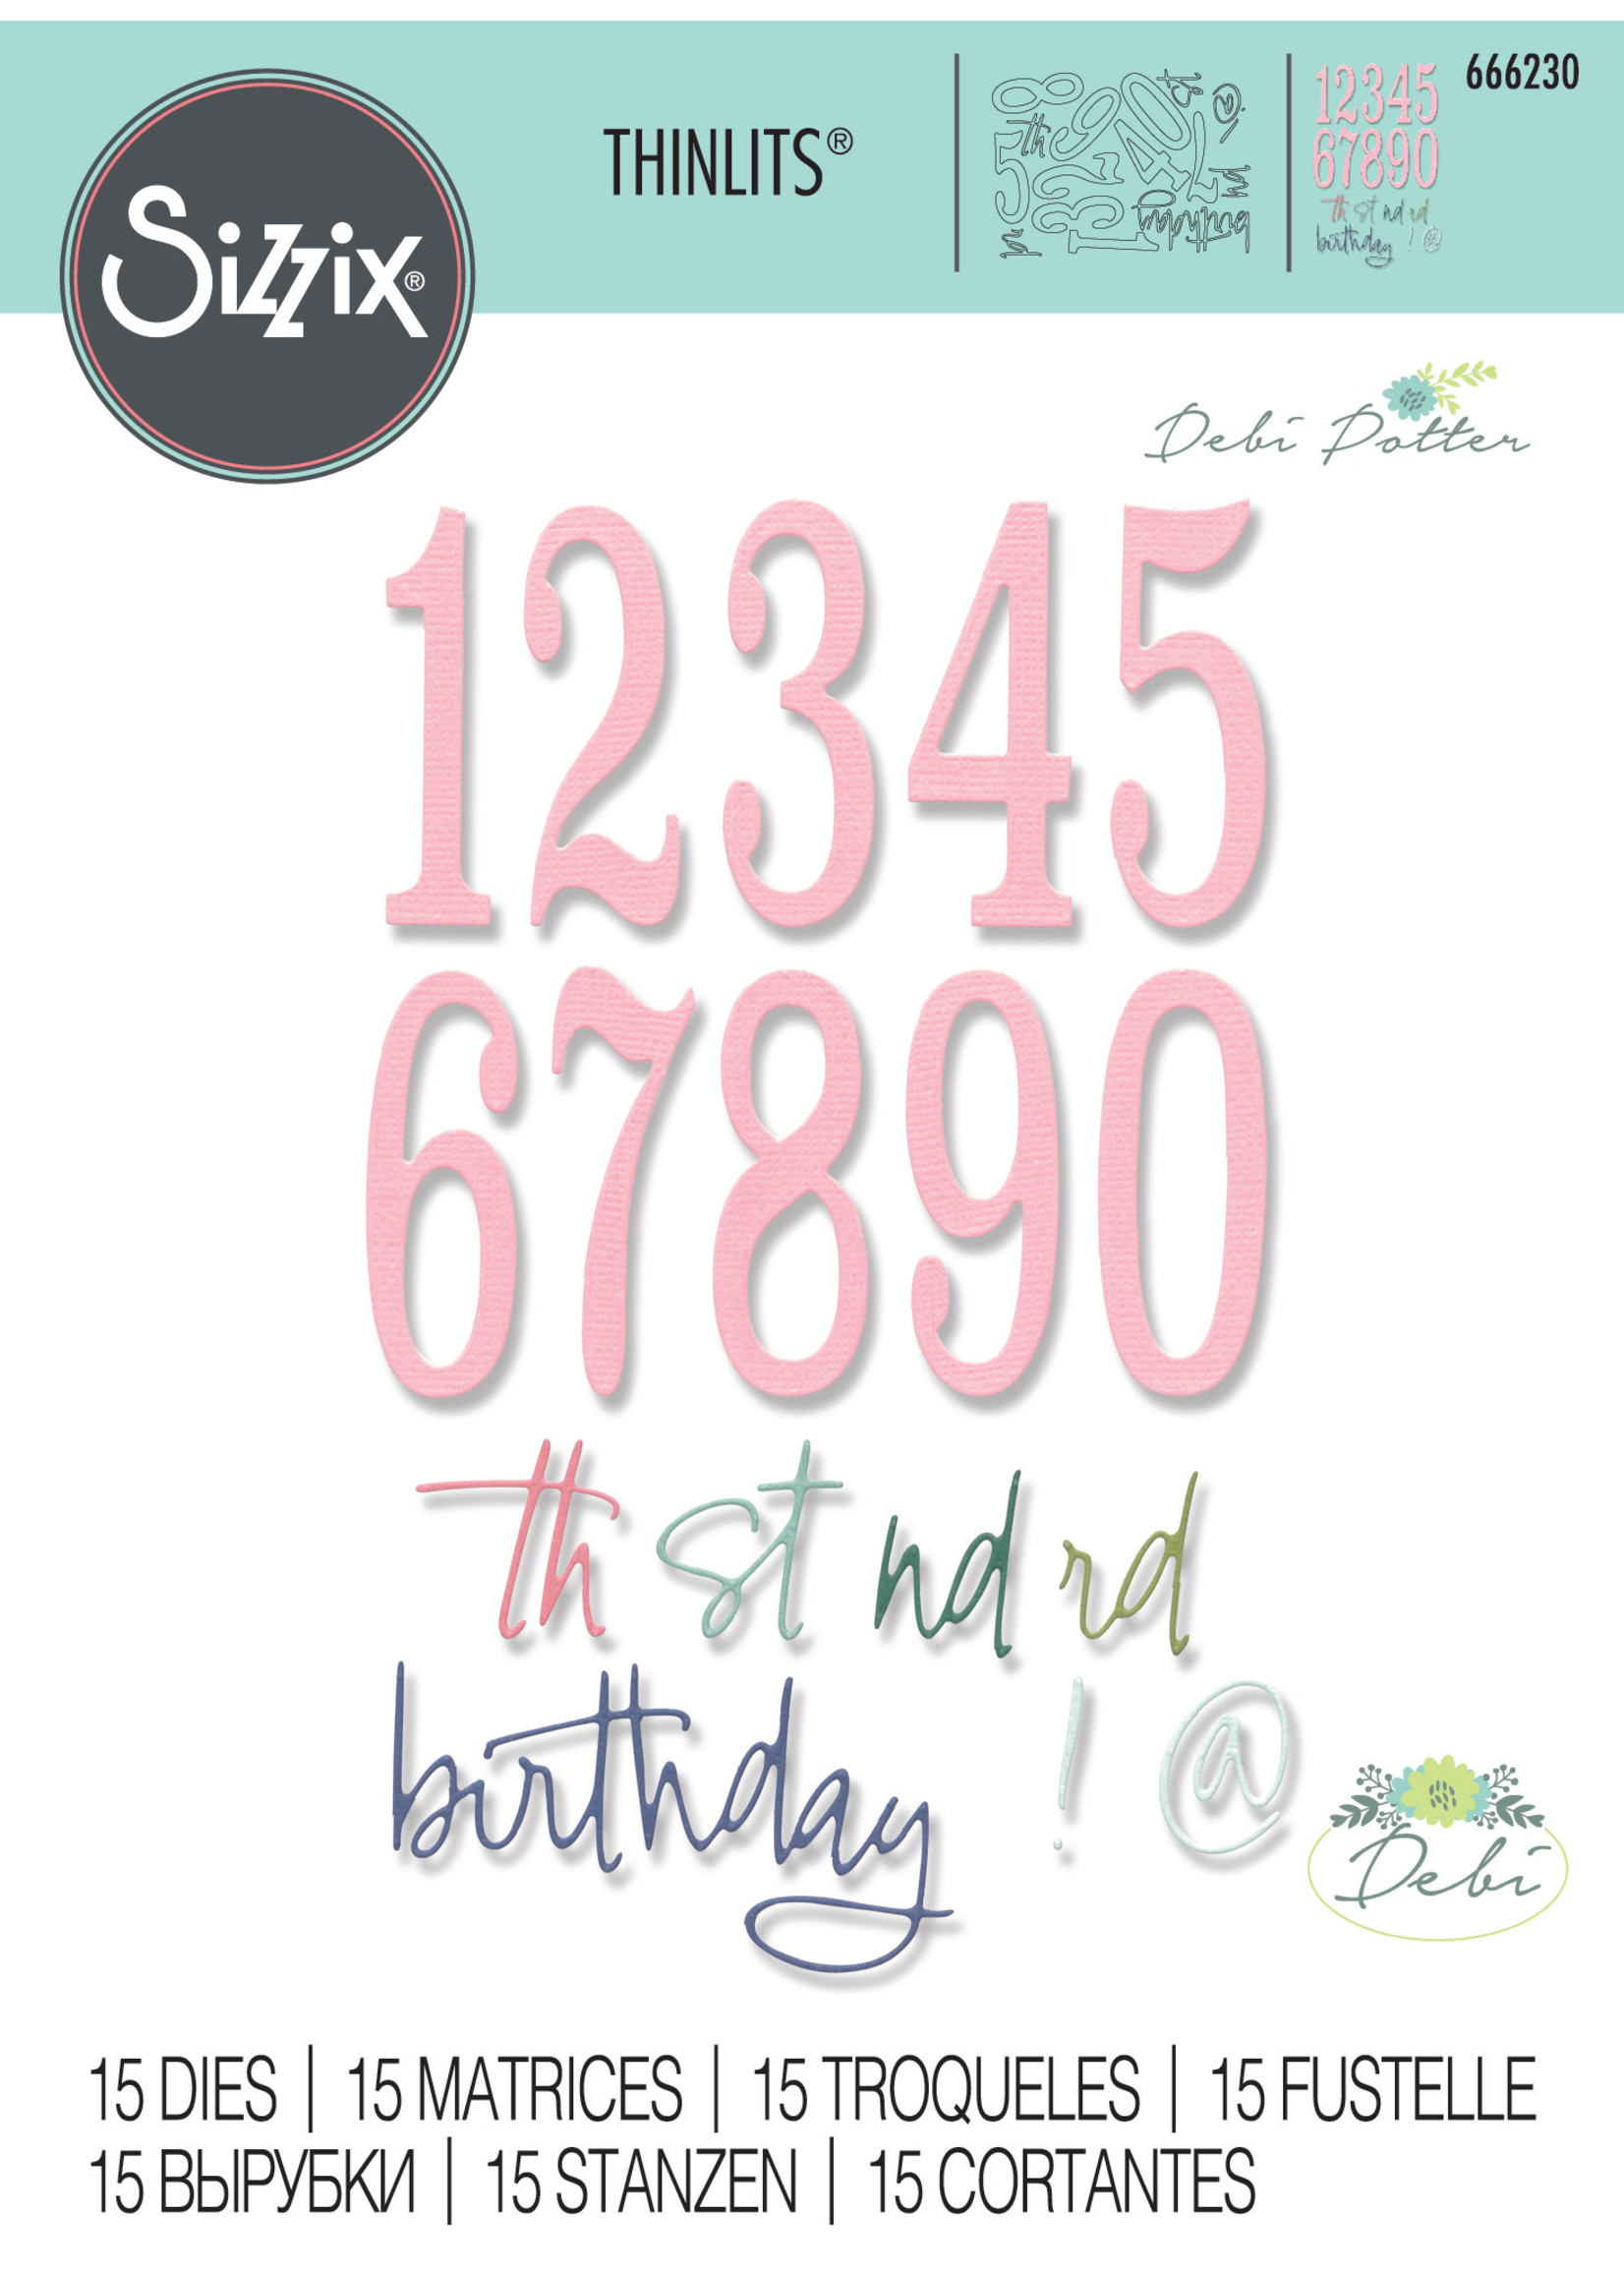 Sizzix Fabulous Birthday Numbers Thinlits